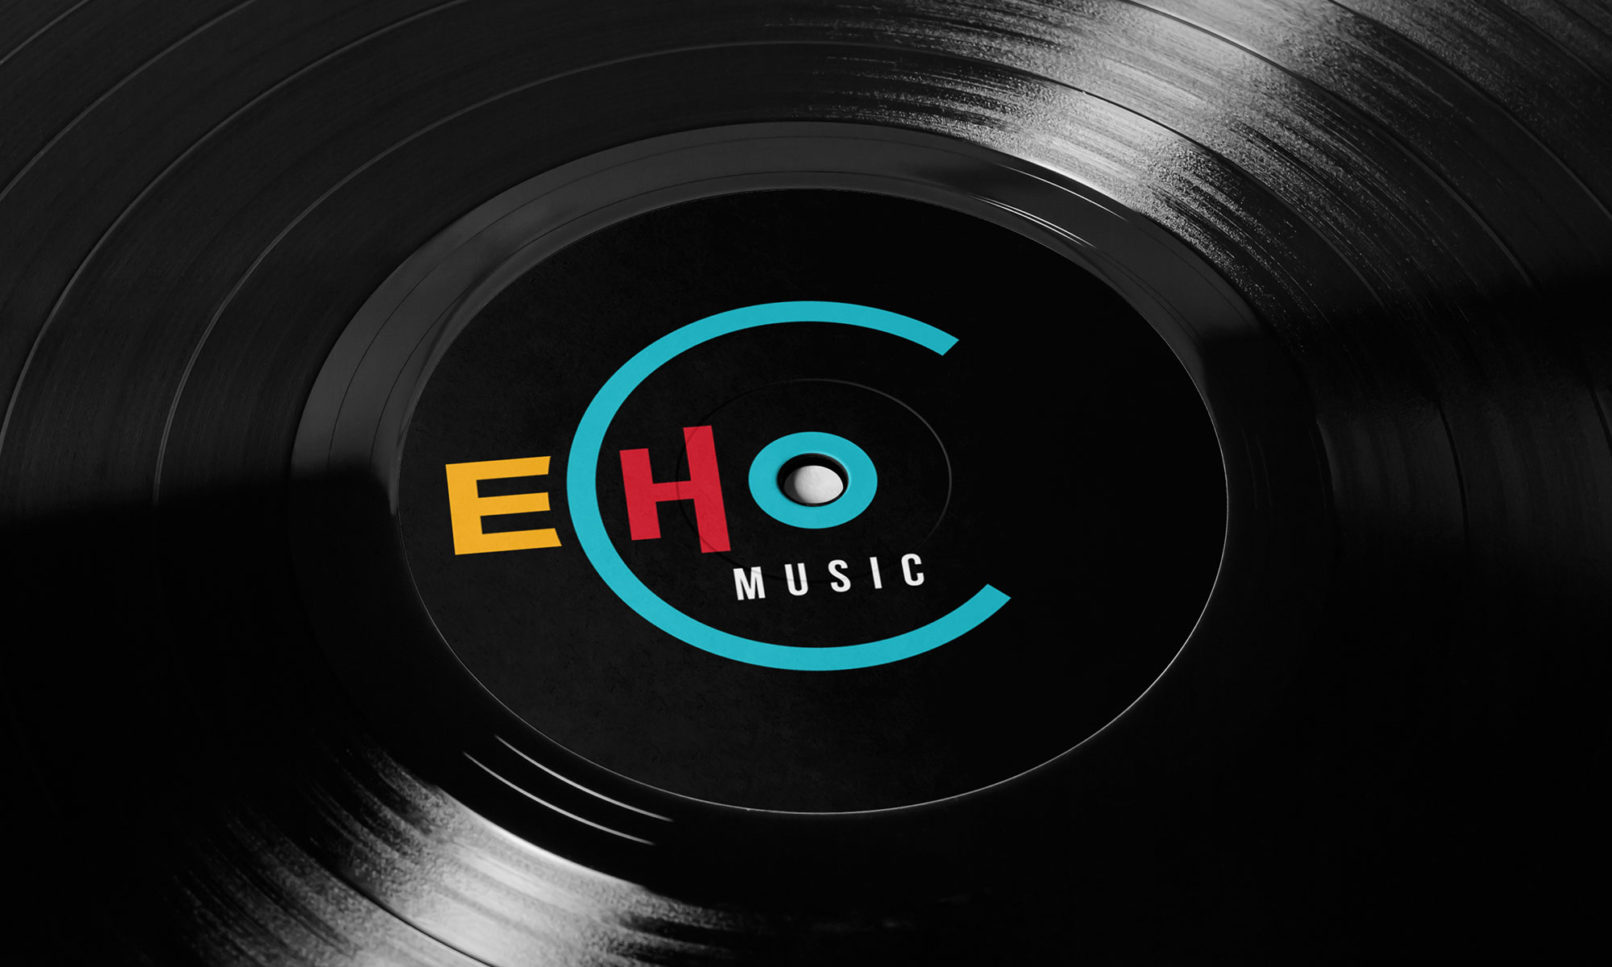 echo music